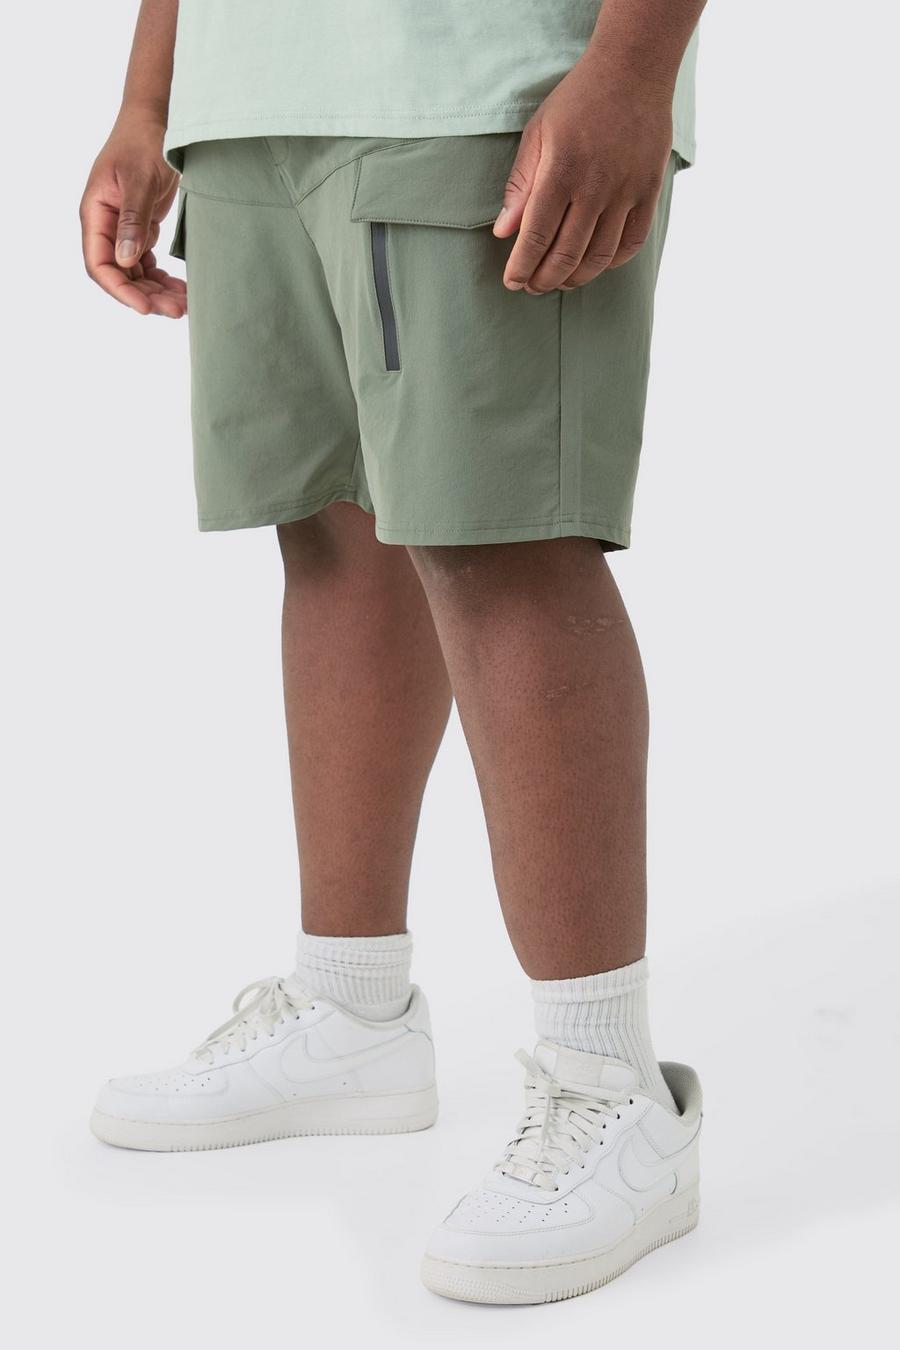 Pantalón corto Plus cargo elástico ligero holgado con cremallera, Khaki